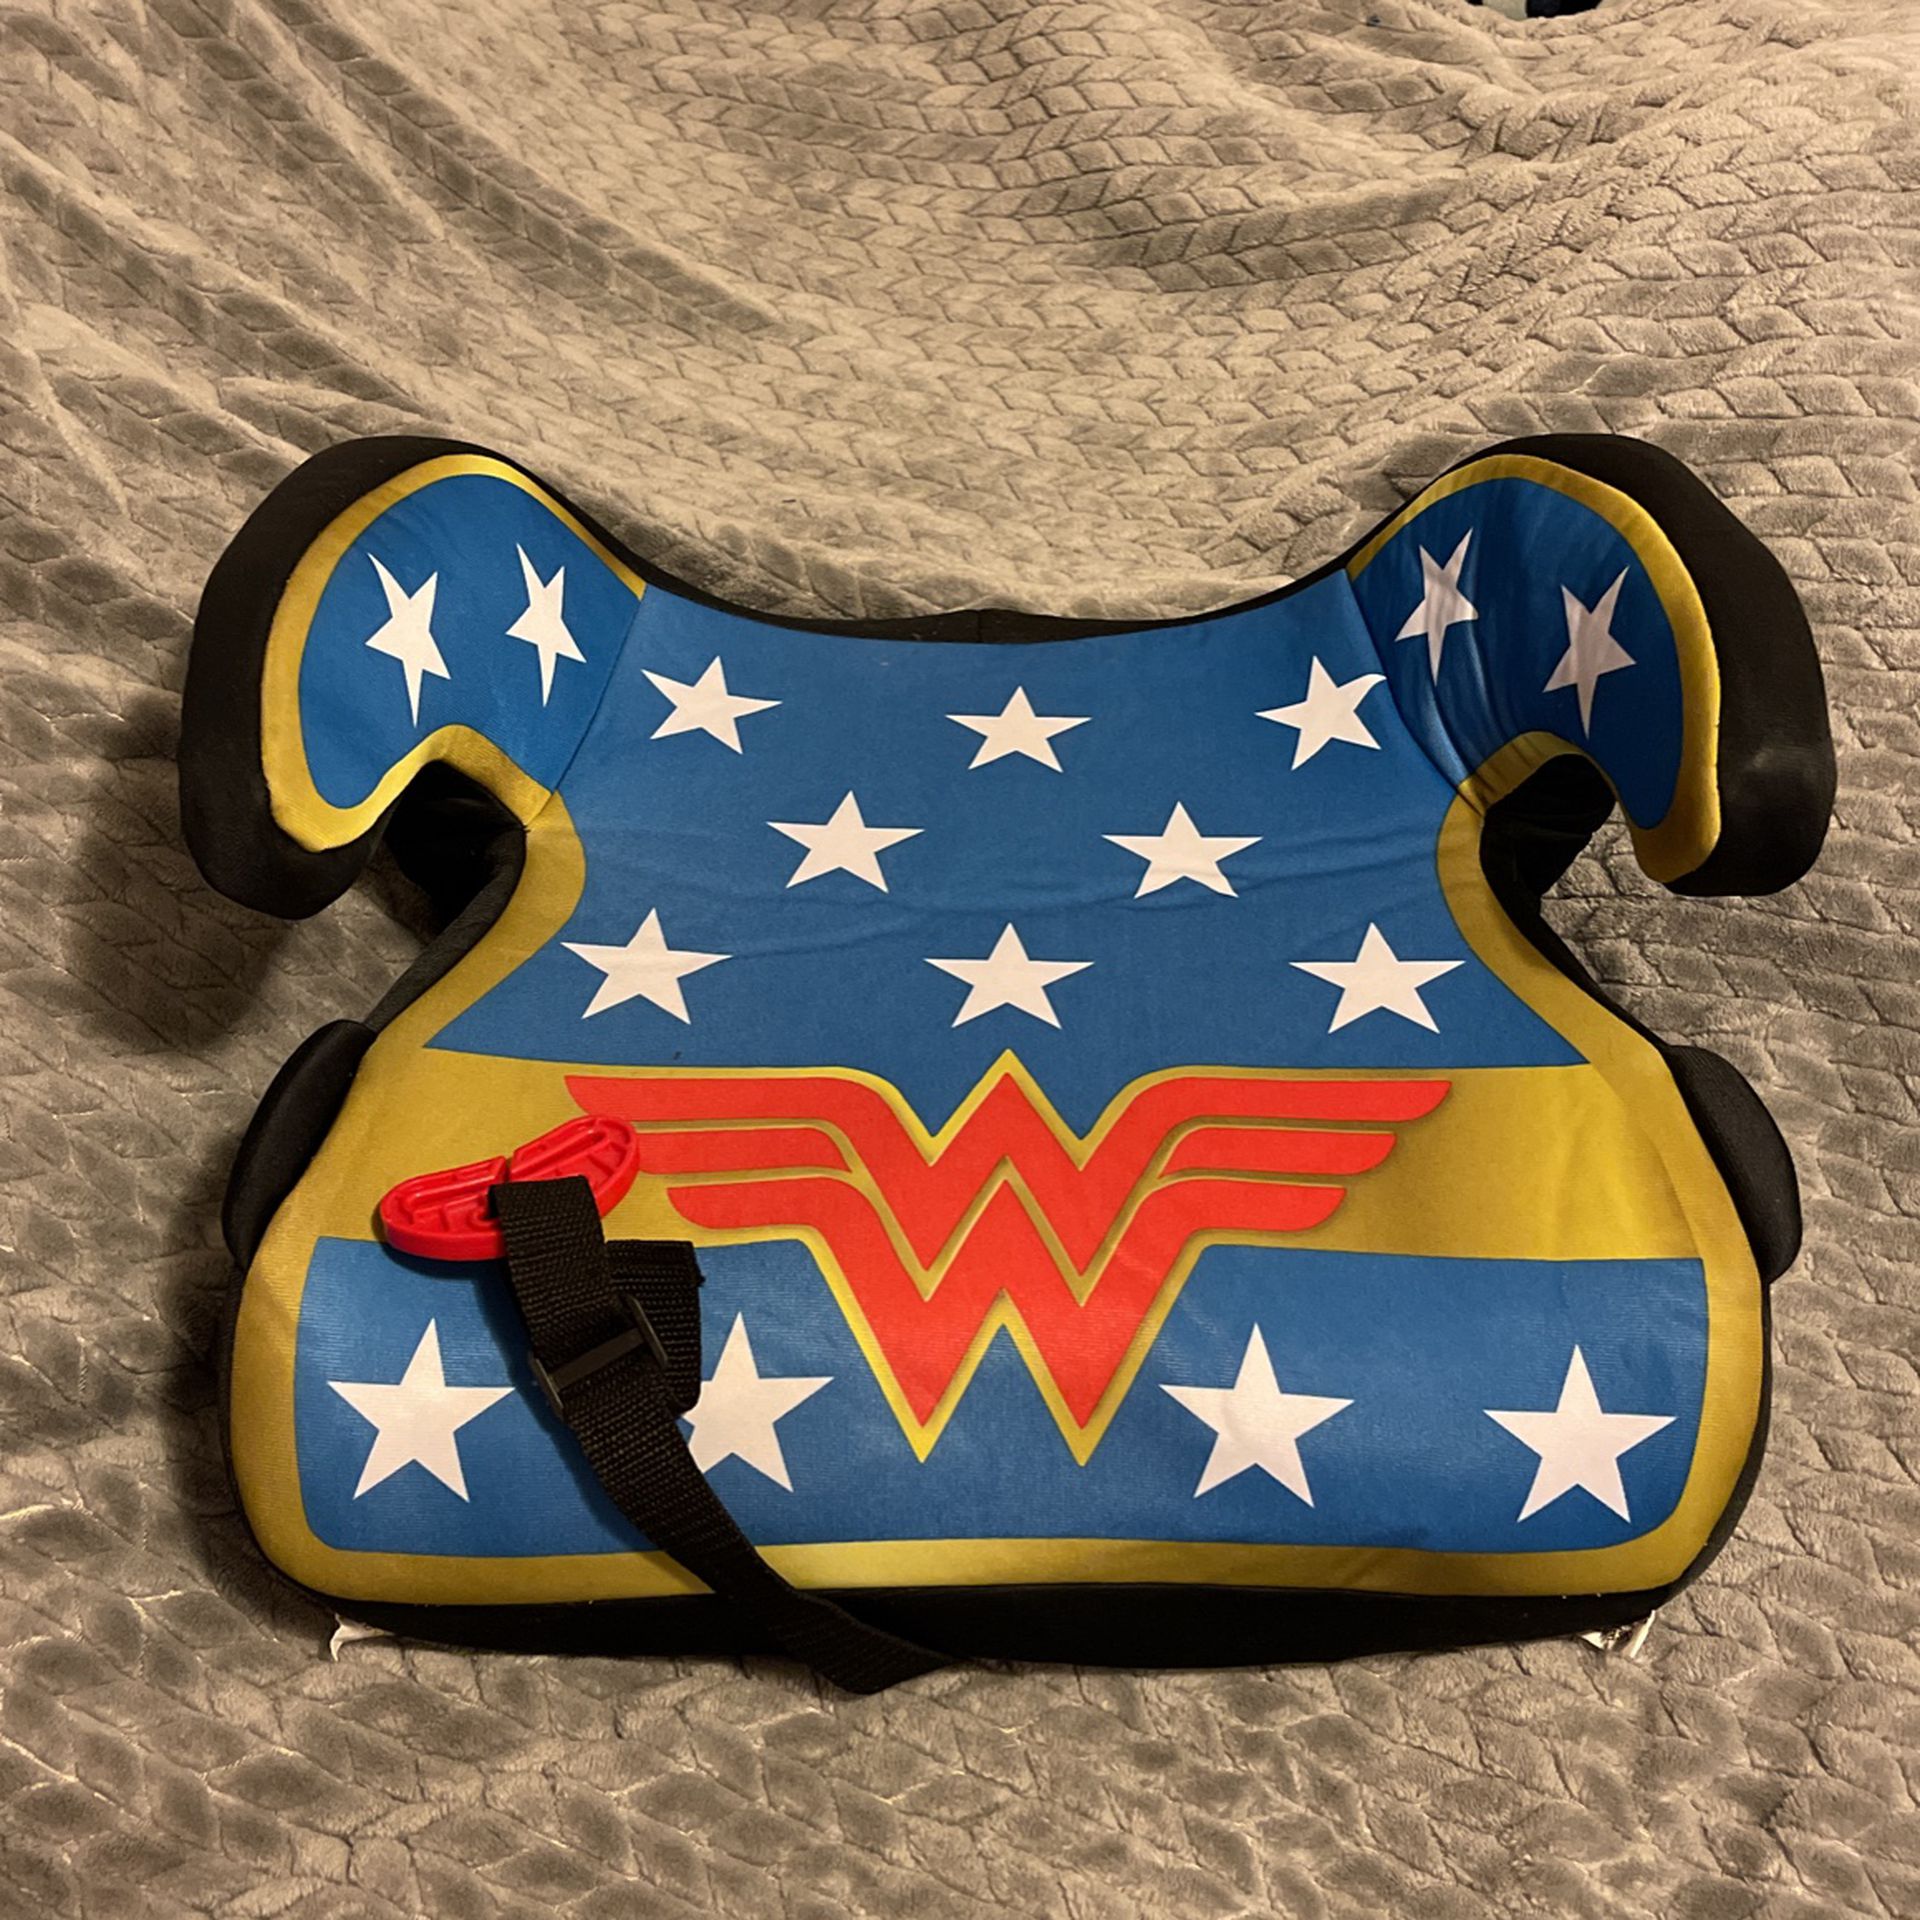 Wonder Woman Booster Seat